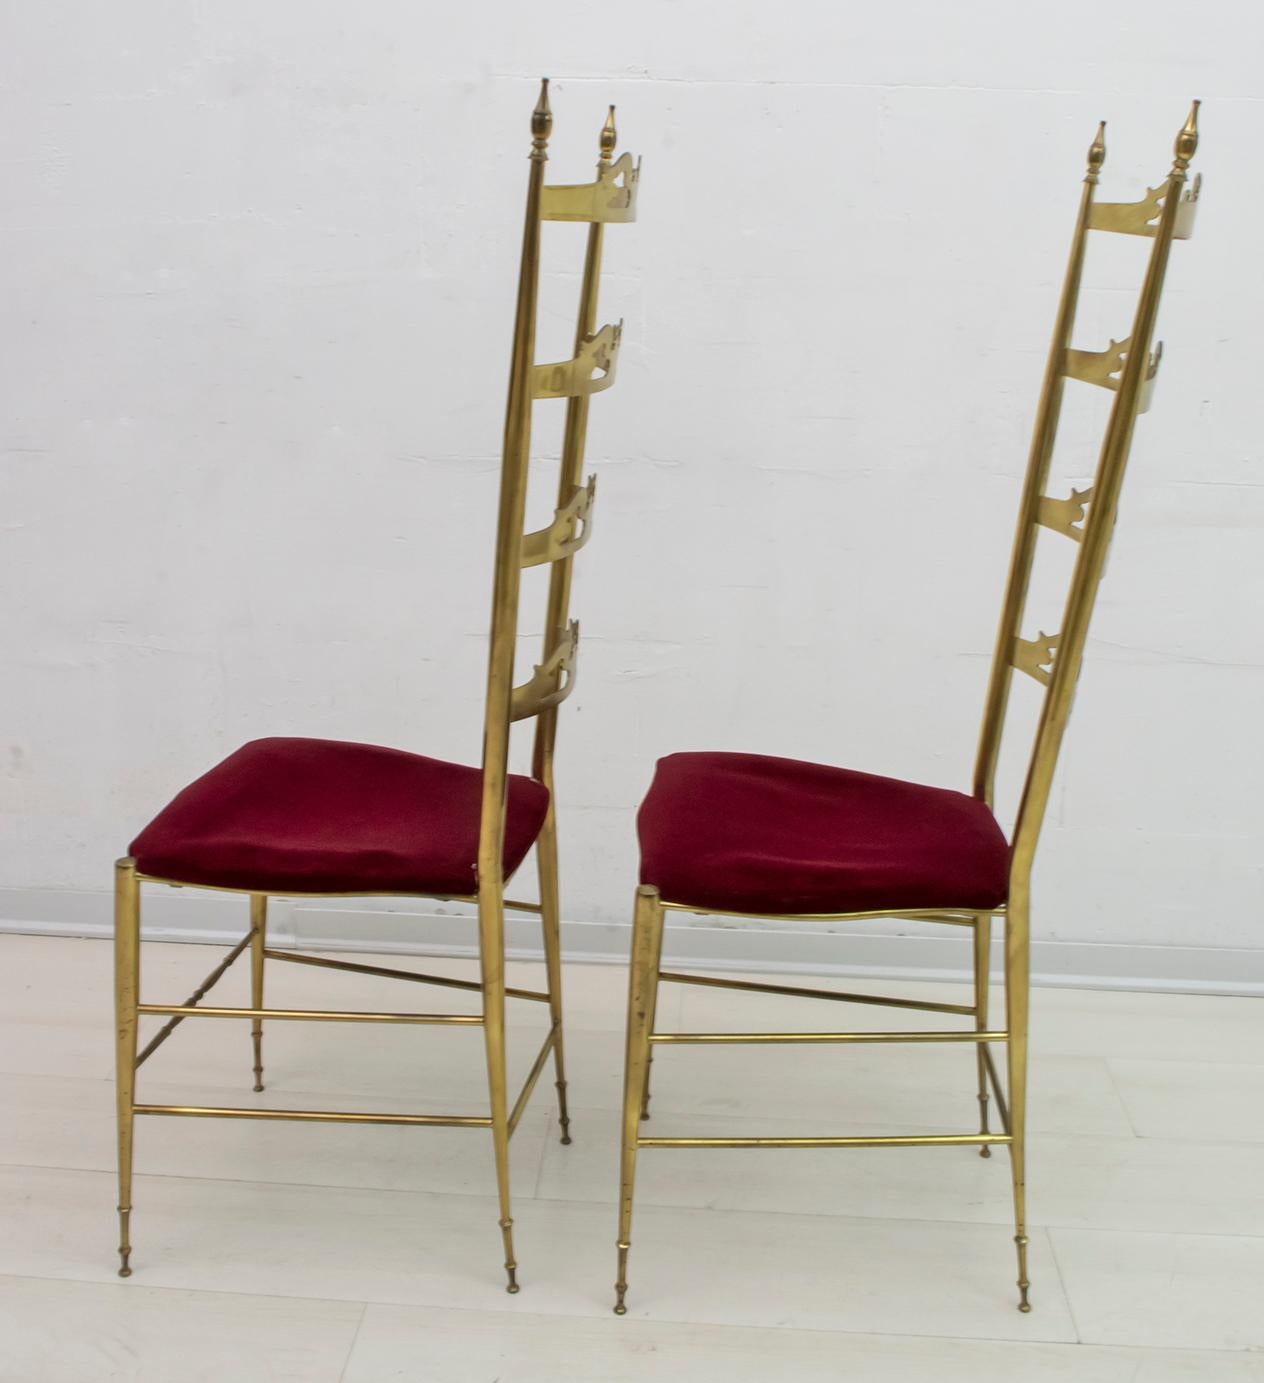 Pair of Mid-Century Modern Italian Brass High Back Chiavari Chairs, 1950s For Sale 1